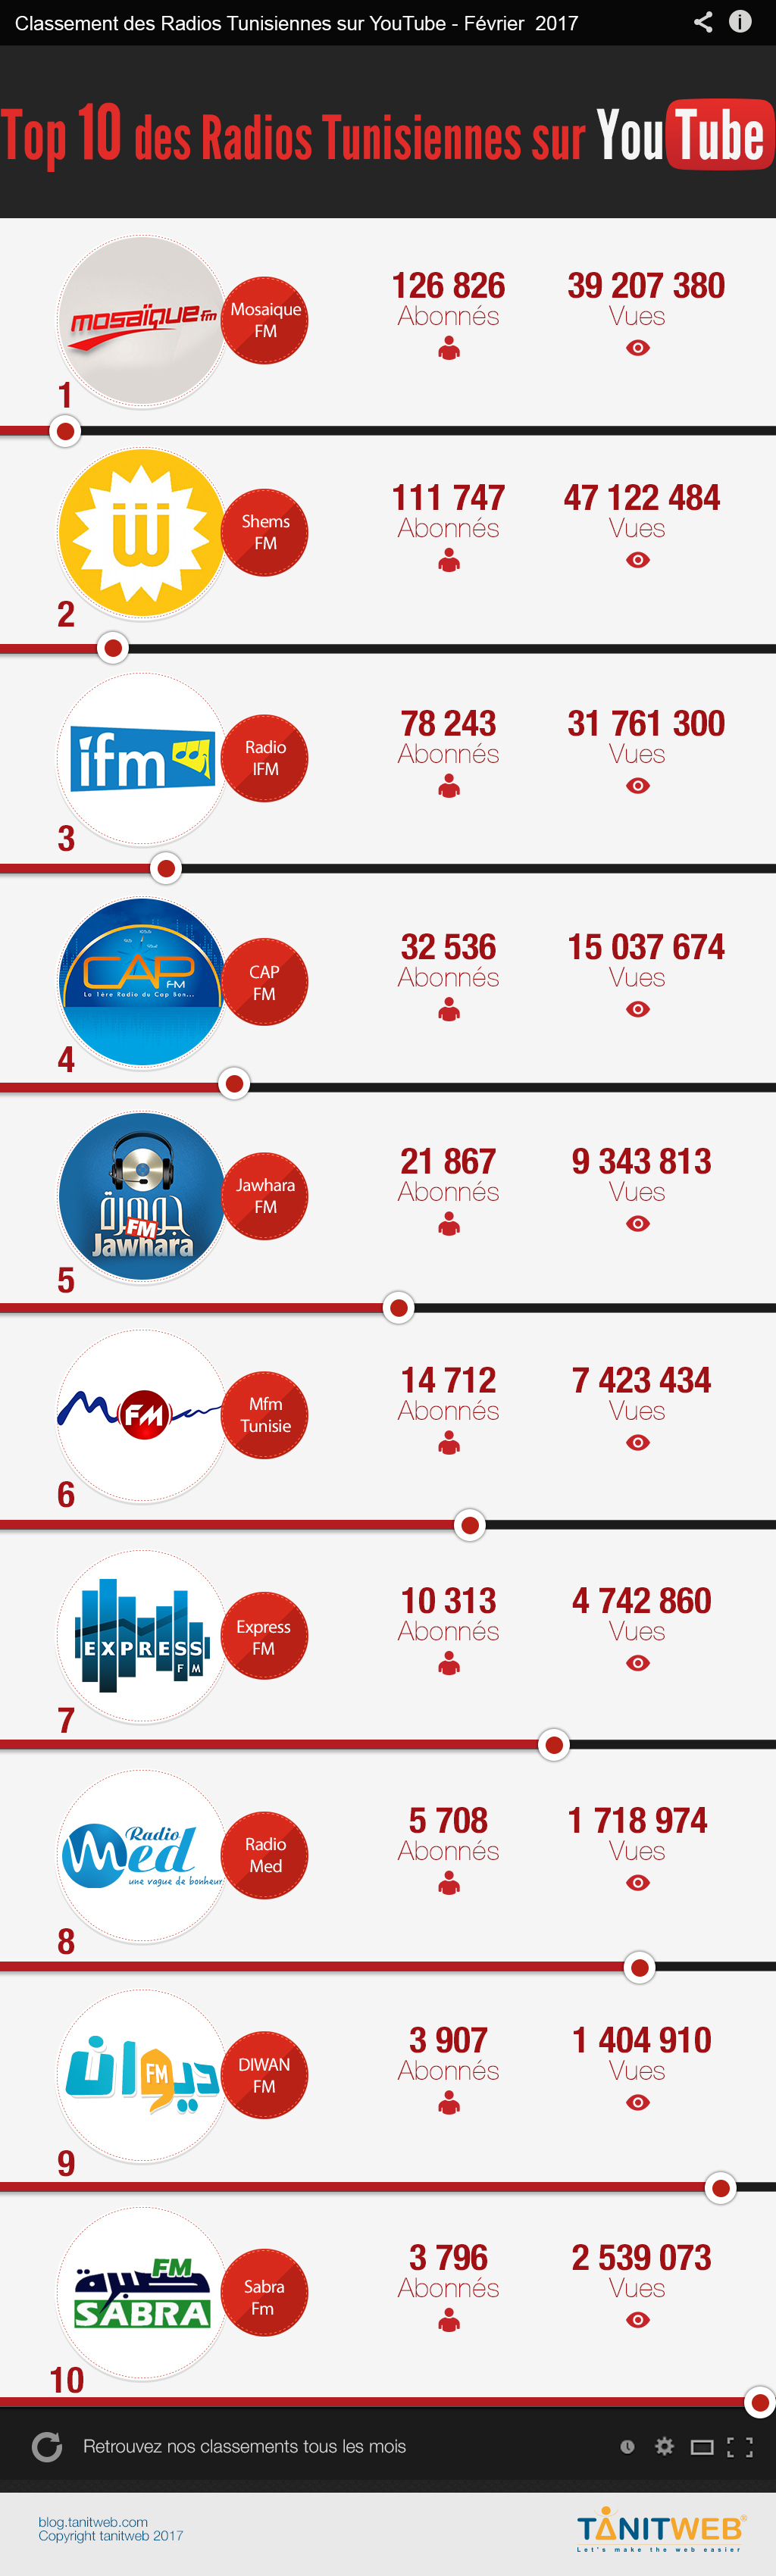 Février 2017 : TOP 10 des Radios Tunisiennes sur YouTube